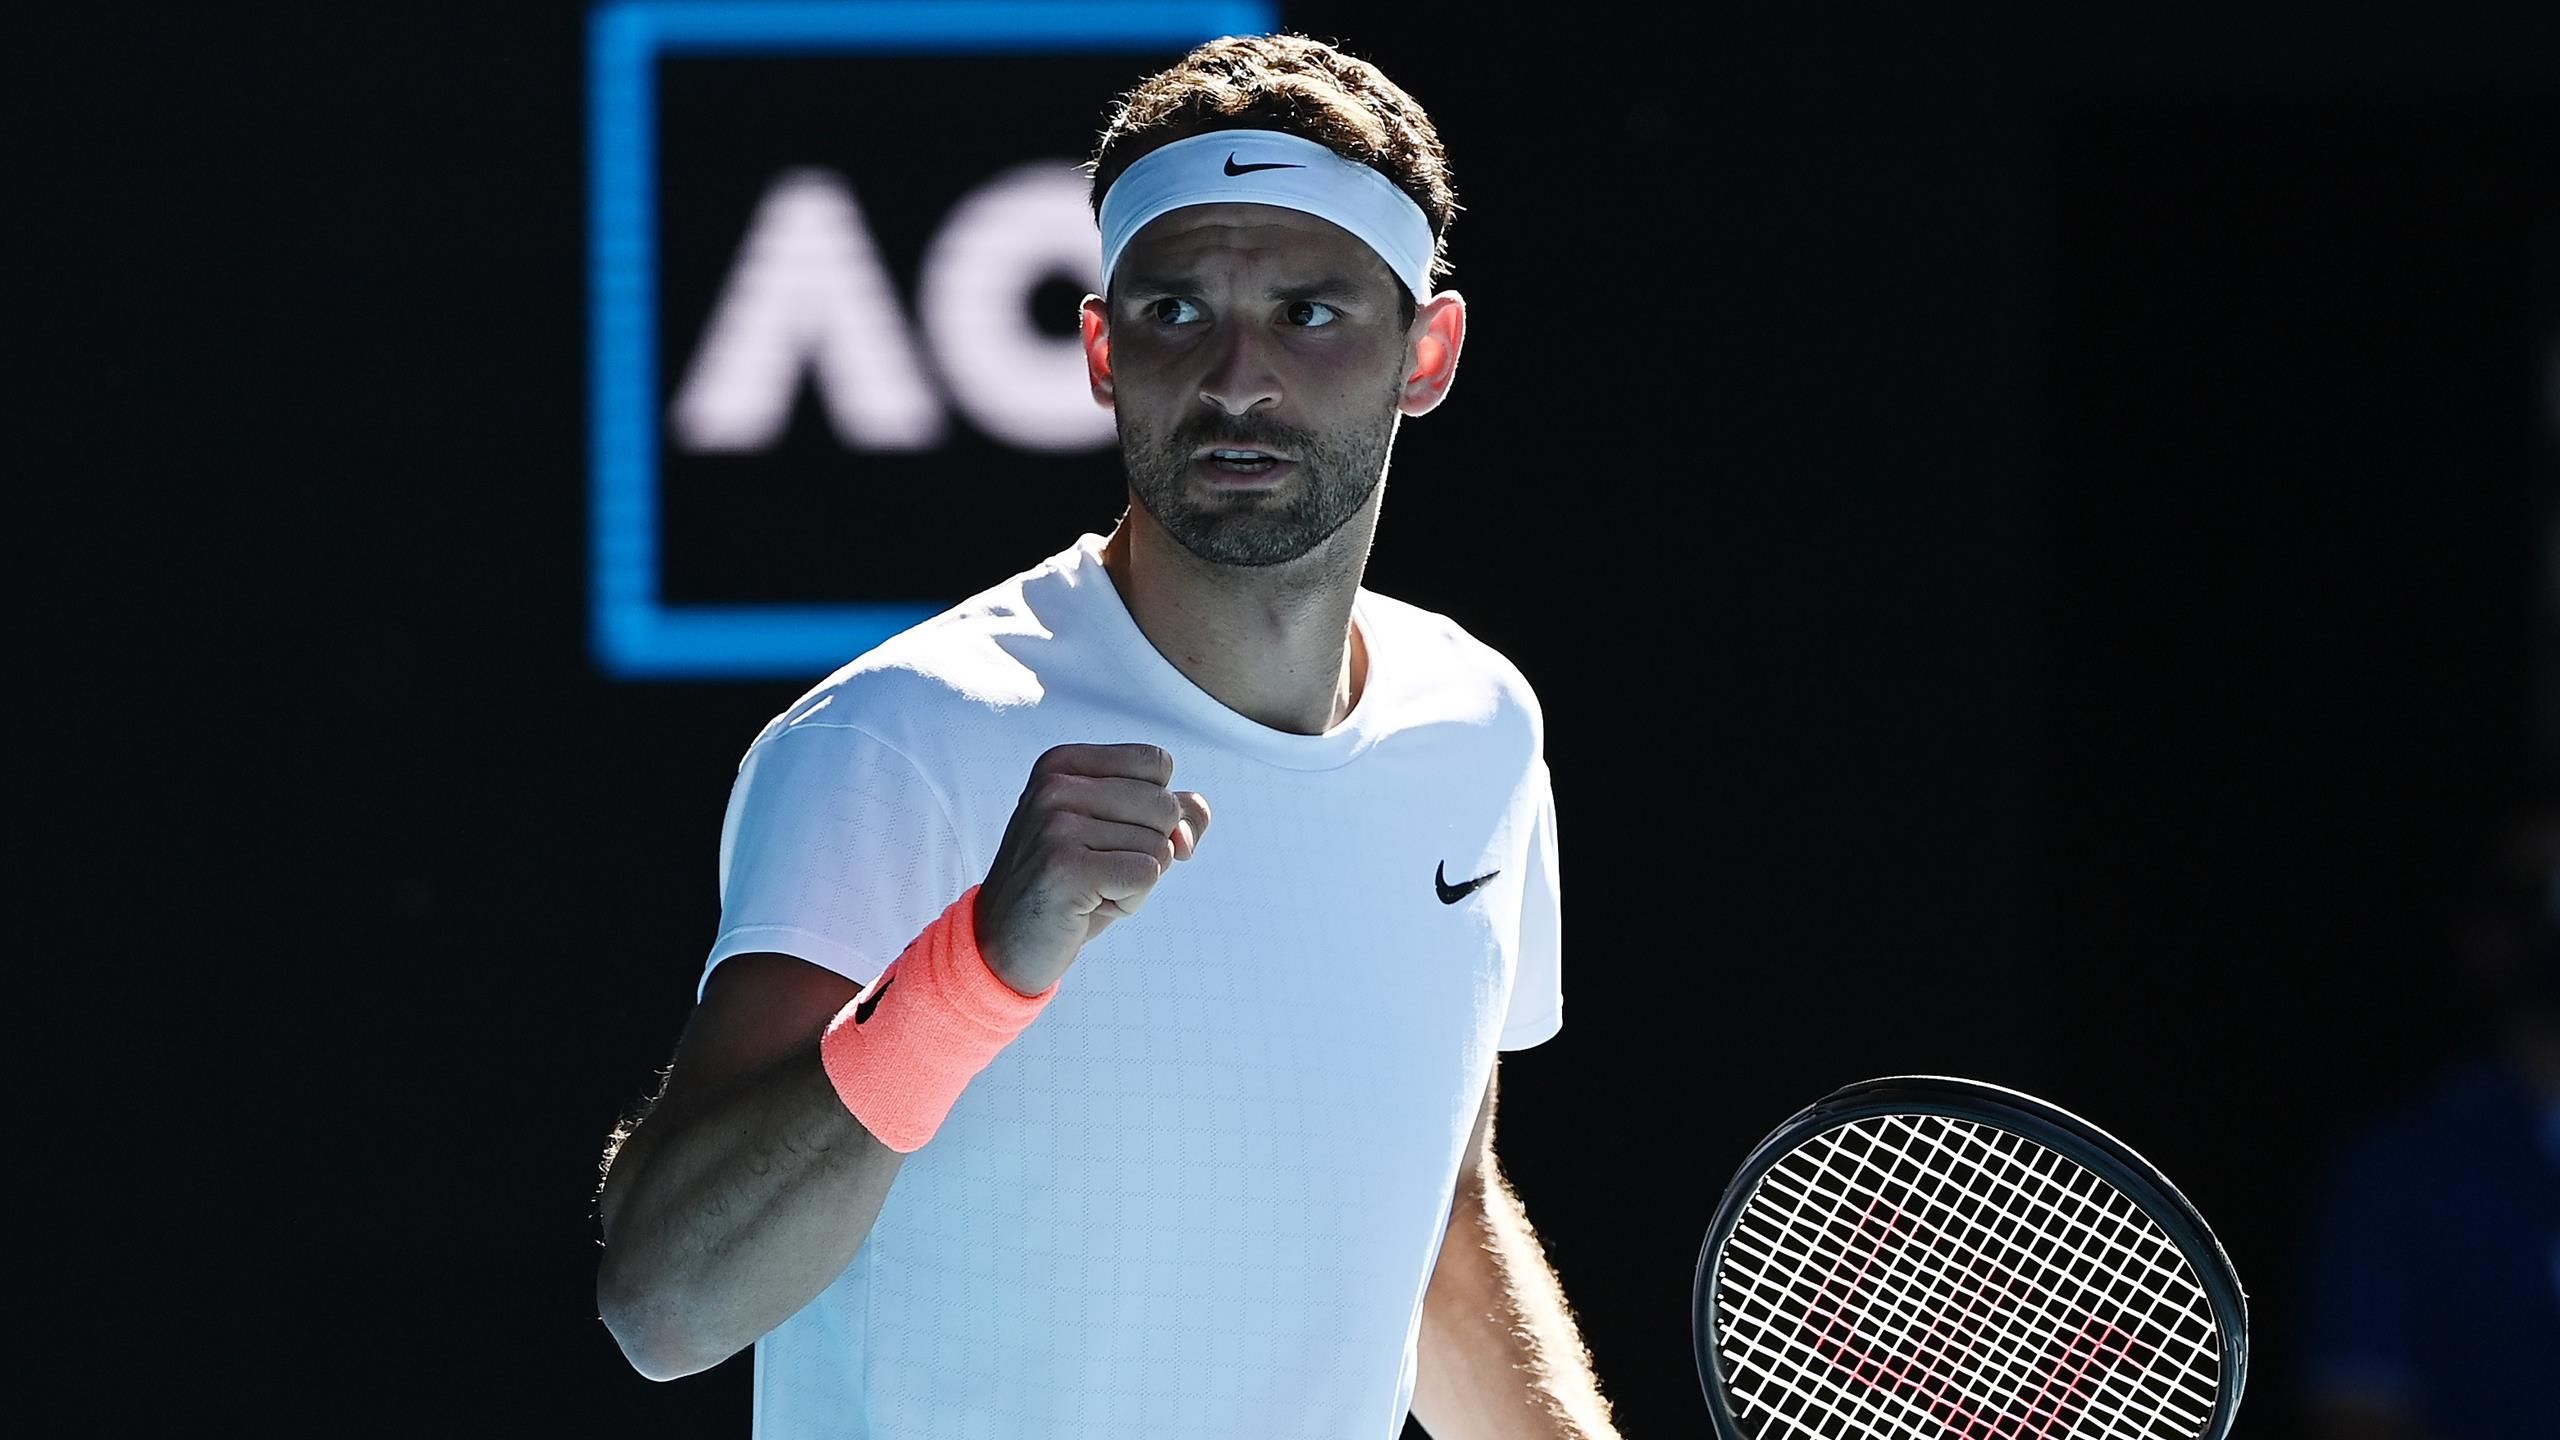 Australian Open 2021 - Now or never for Grigor Dimitrov to make his Grand Slam breakthrough